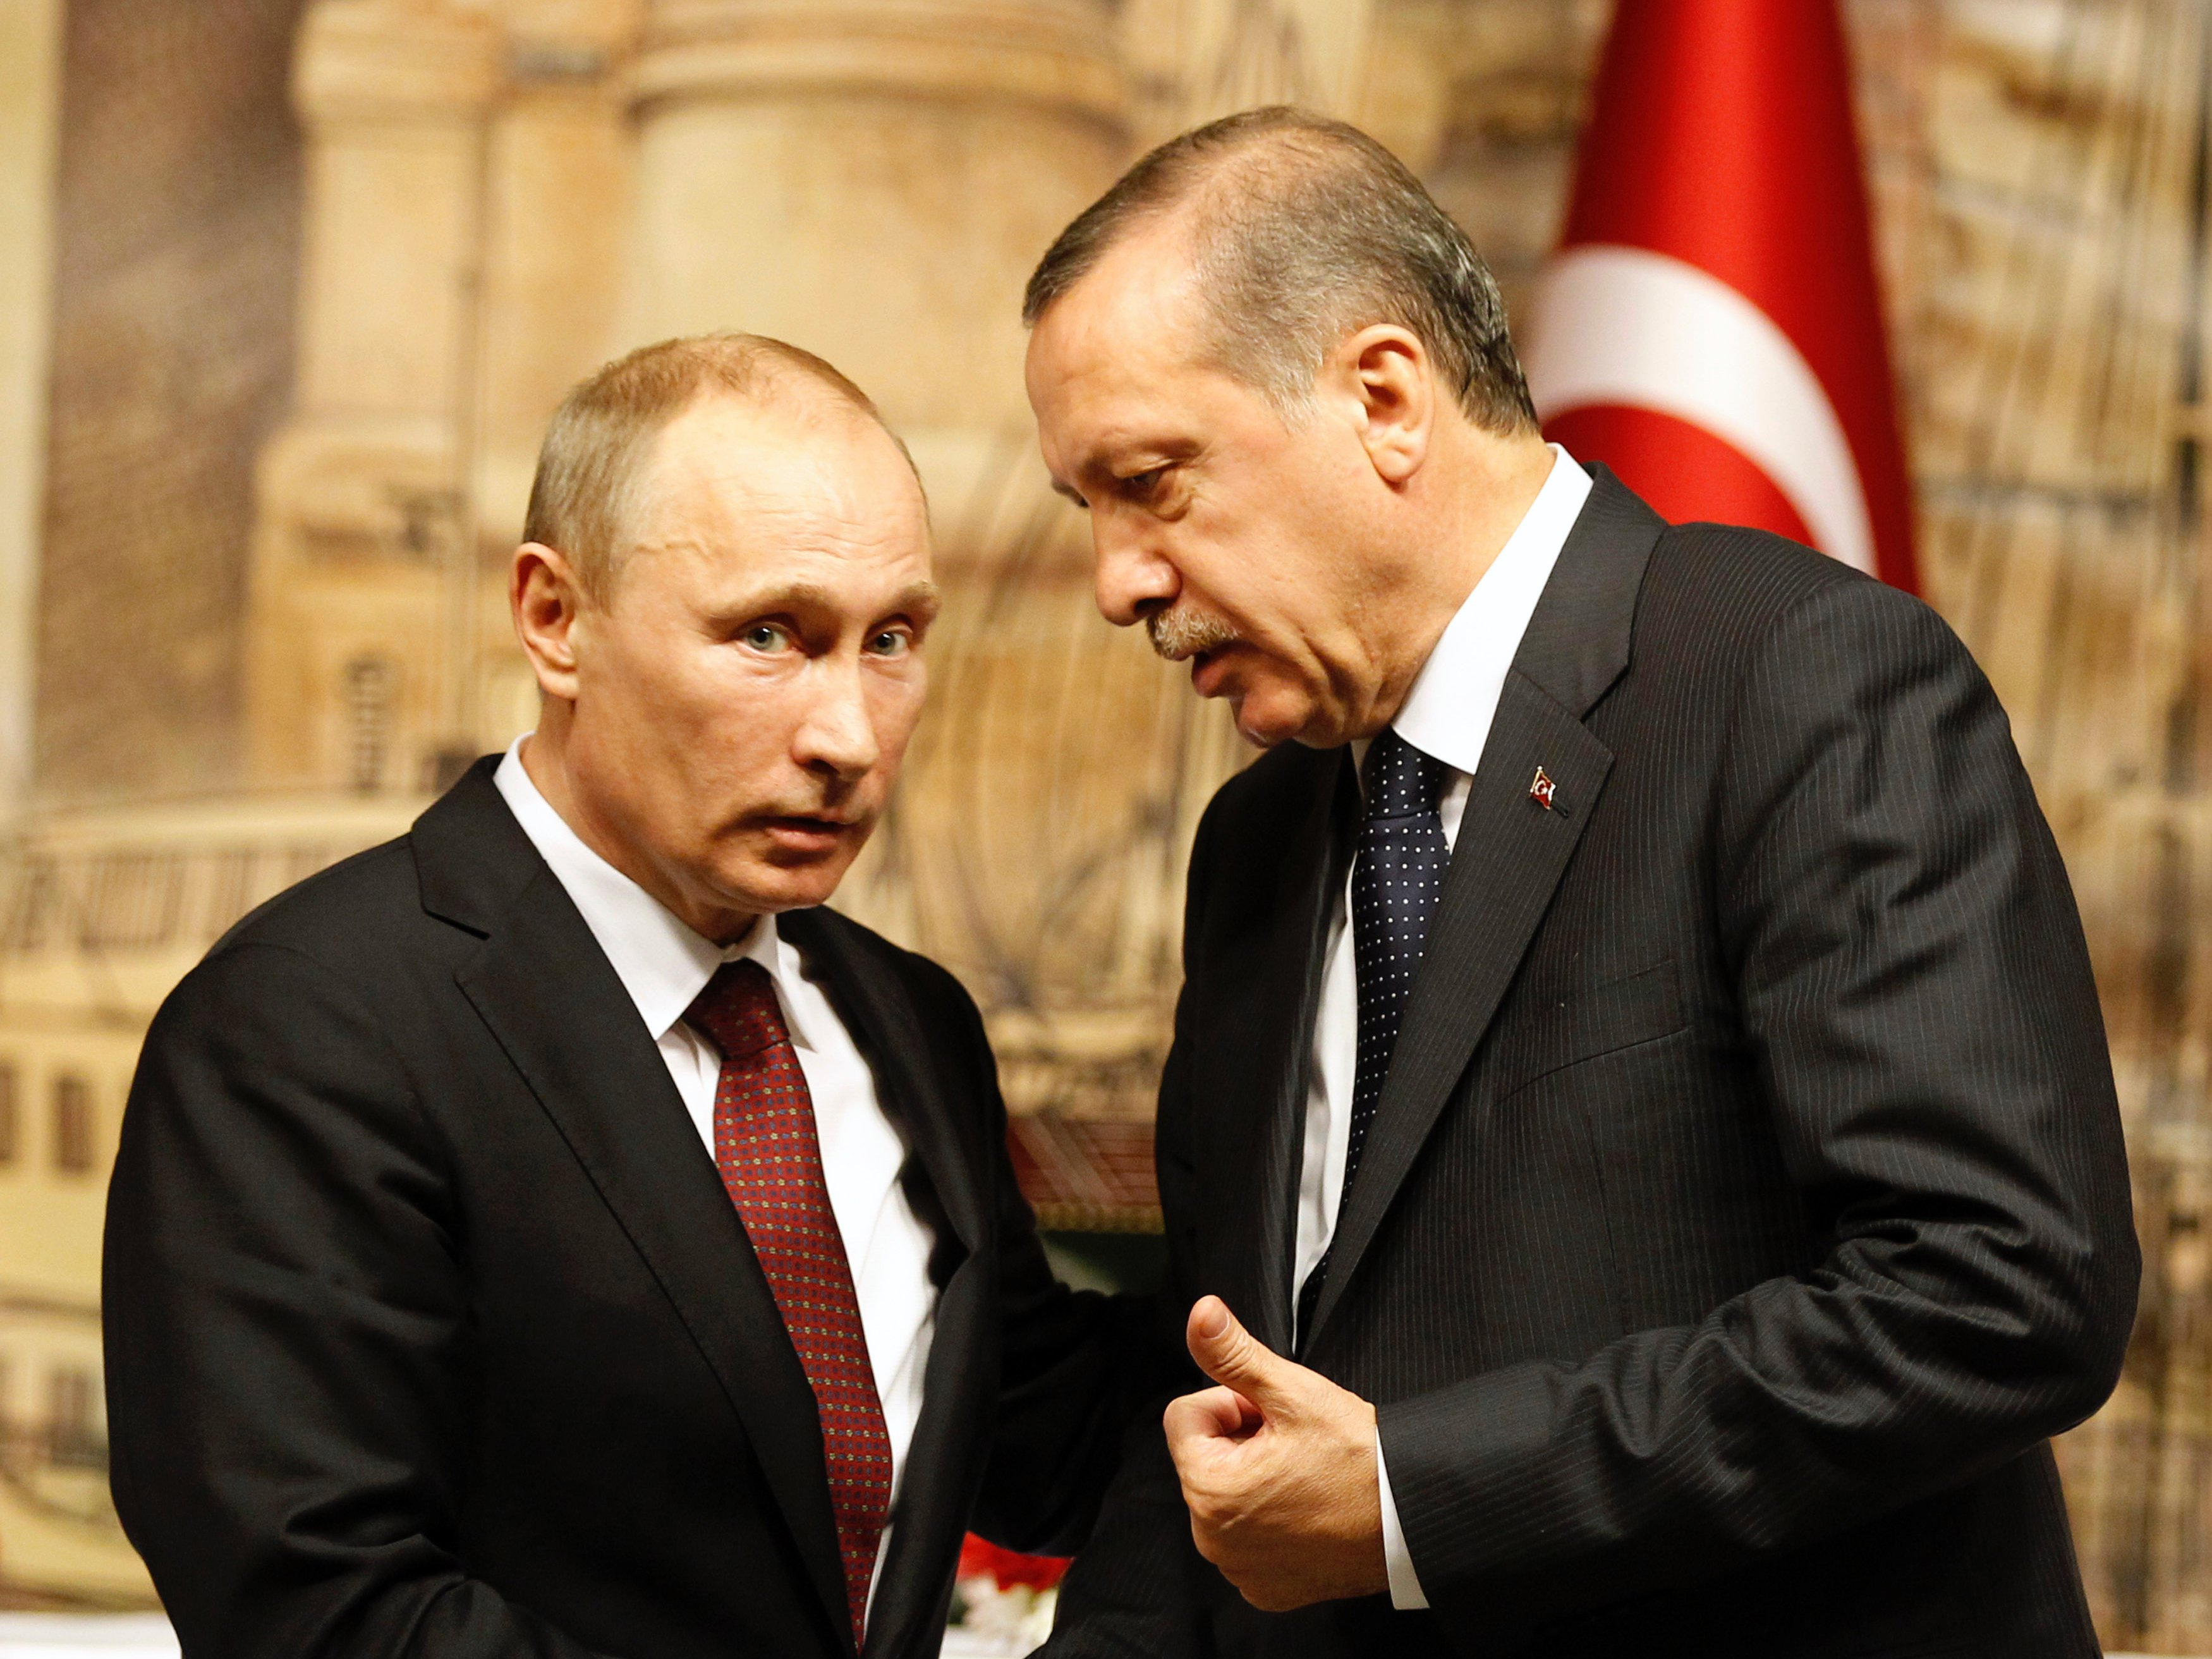 Putin and Erdogan to meet next month amid growing rapprochement